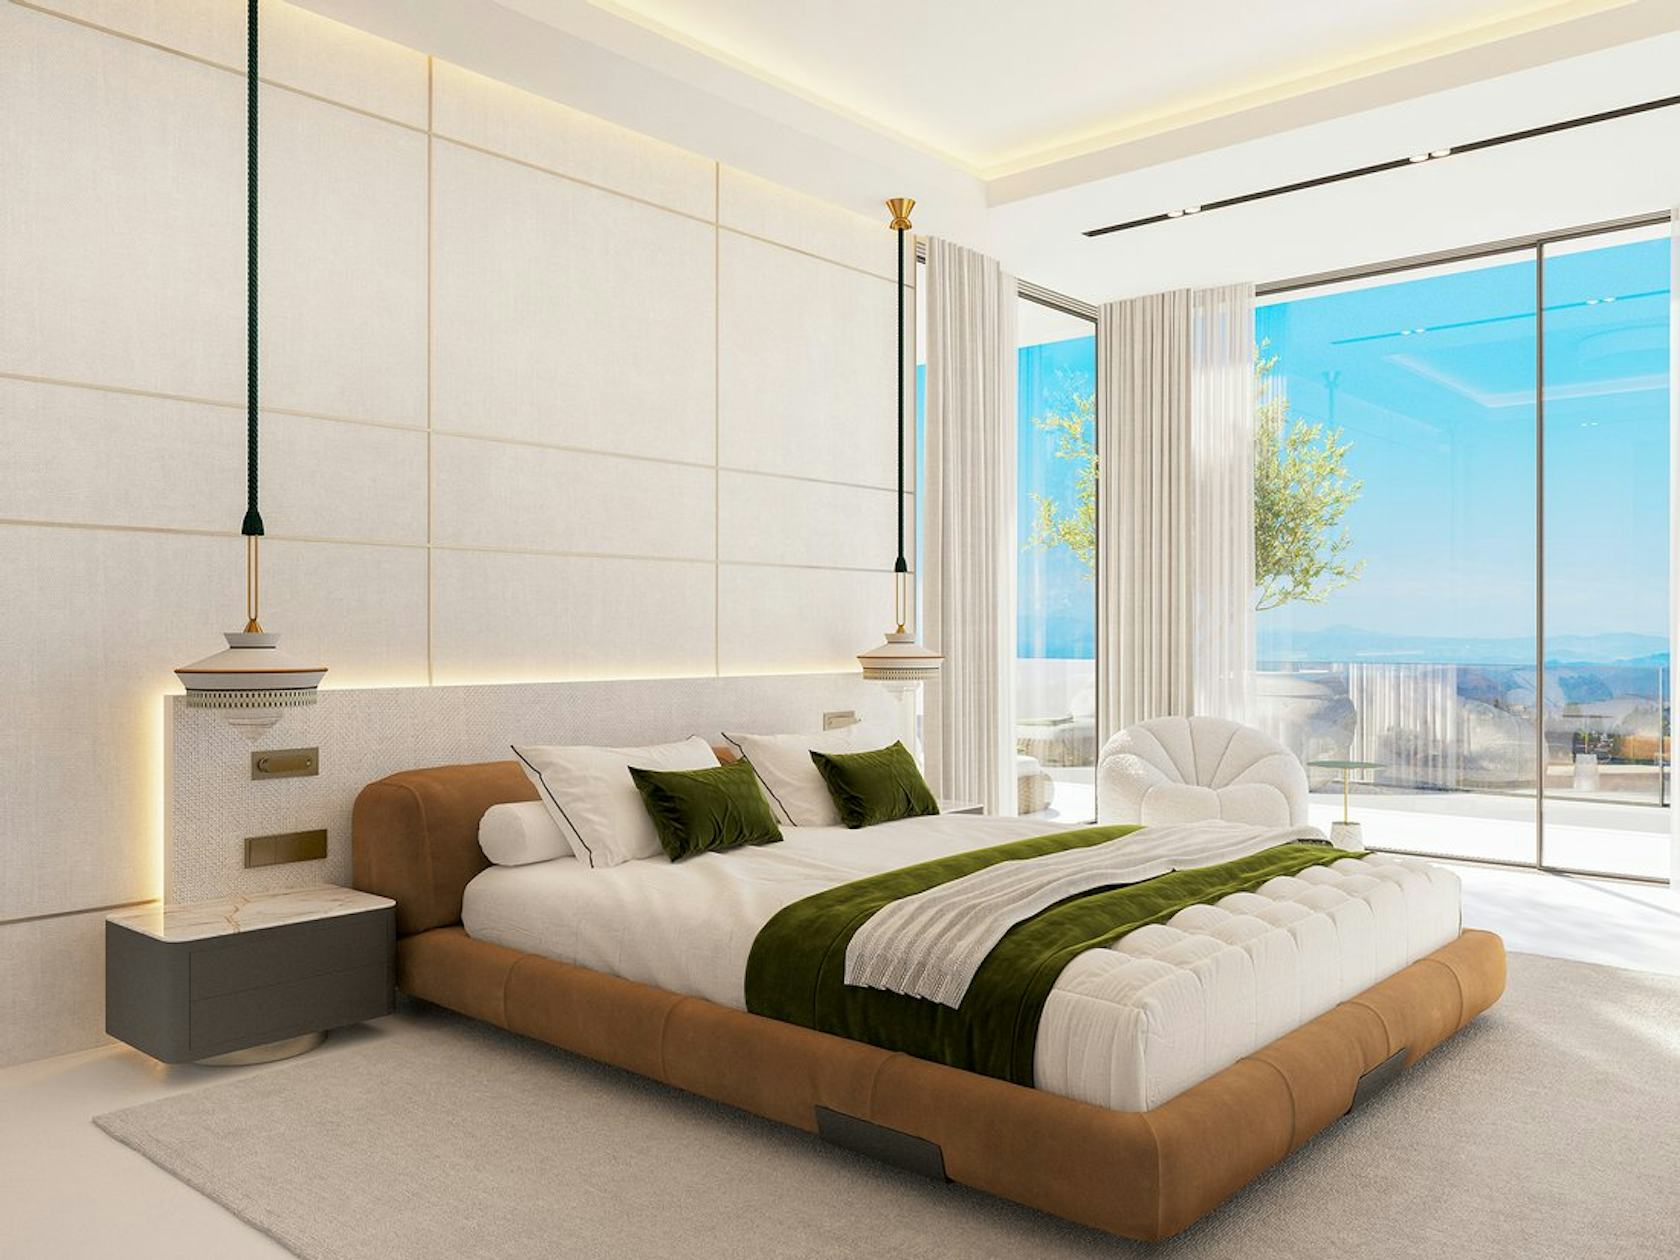 interior design indoors home decor furniture cushion bed bedroom room